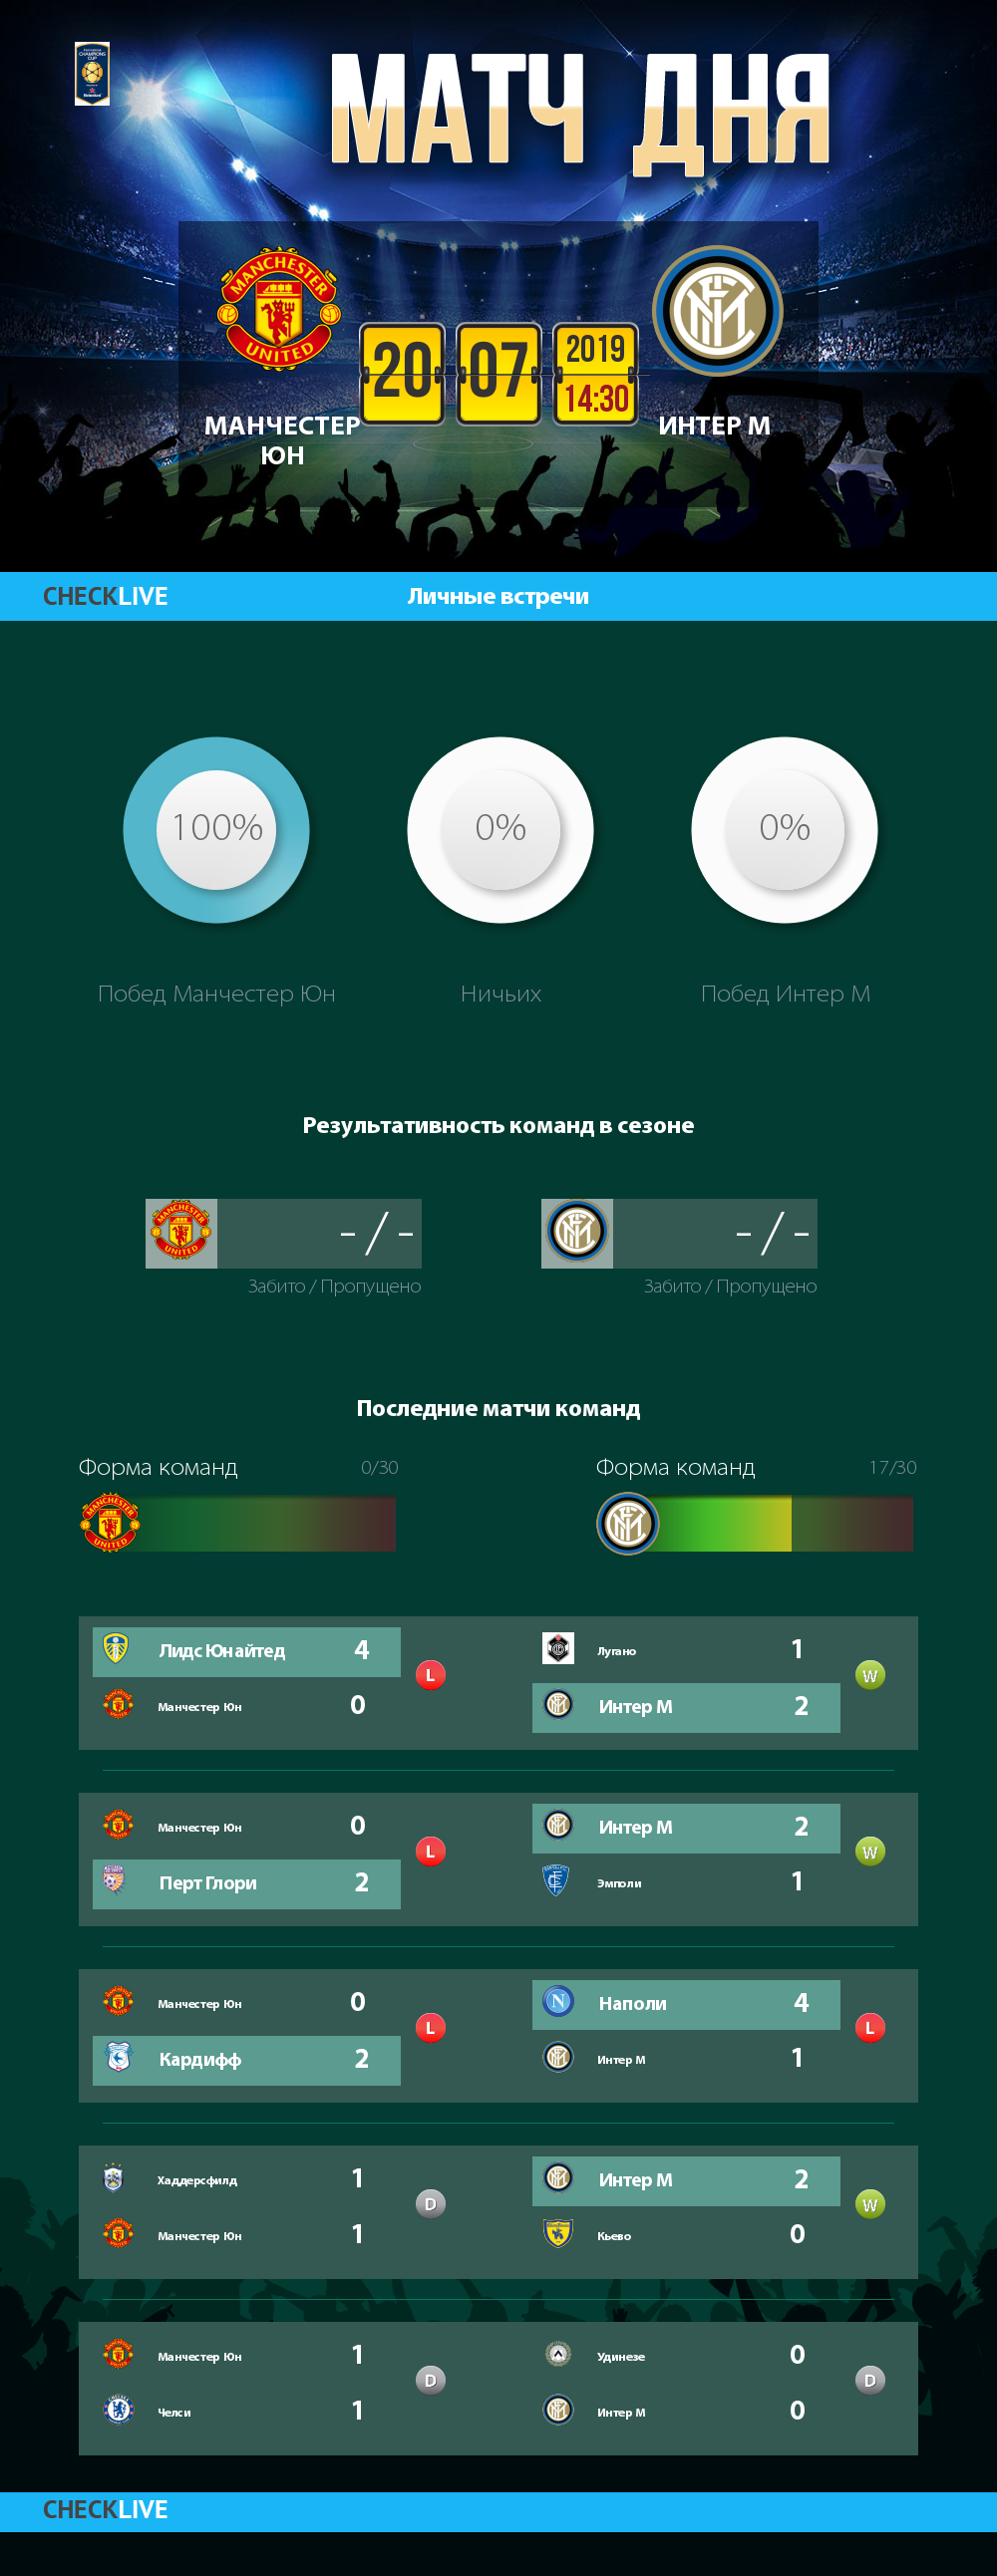 Инфографика Манчестер Юн и Интер М матч дня 20.07.2019